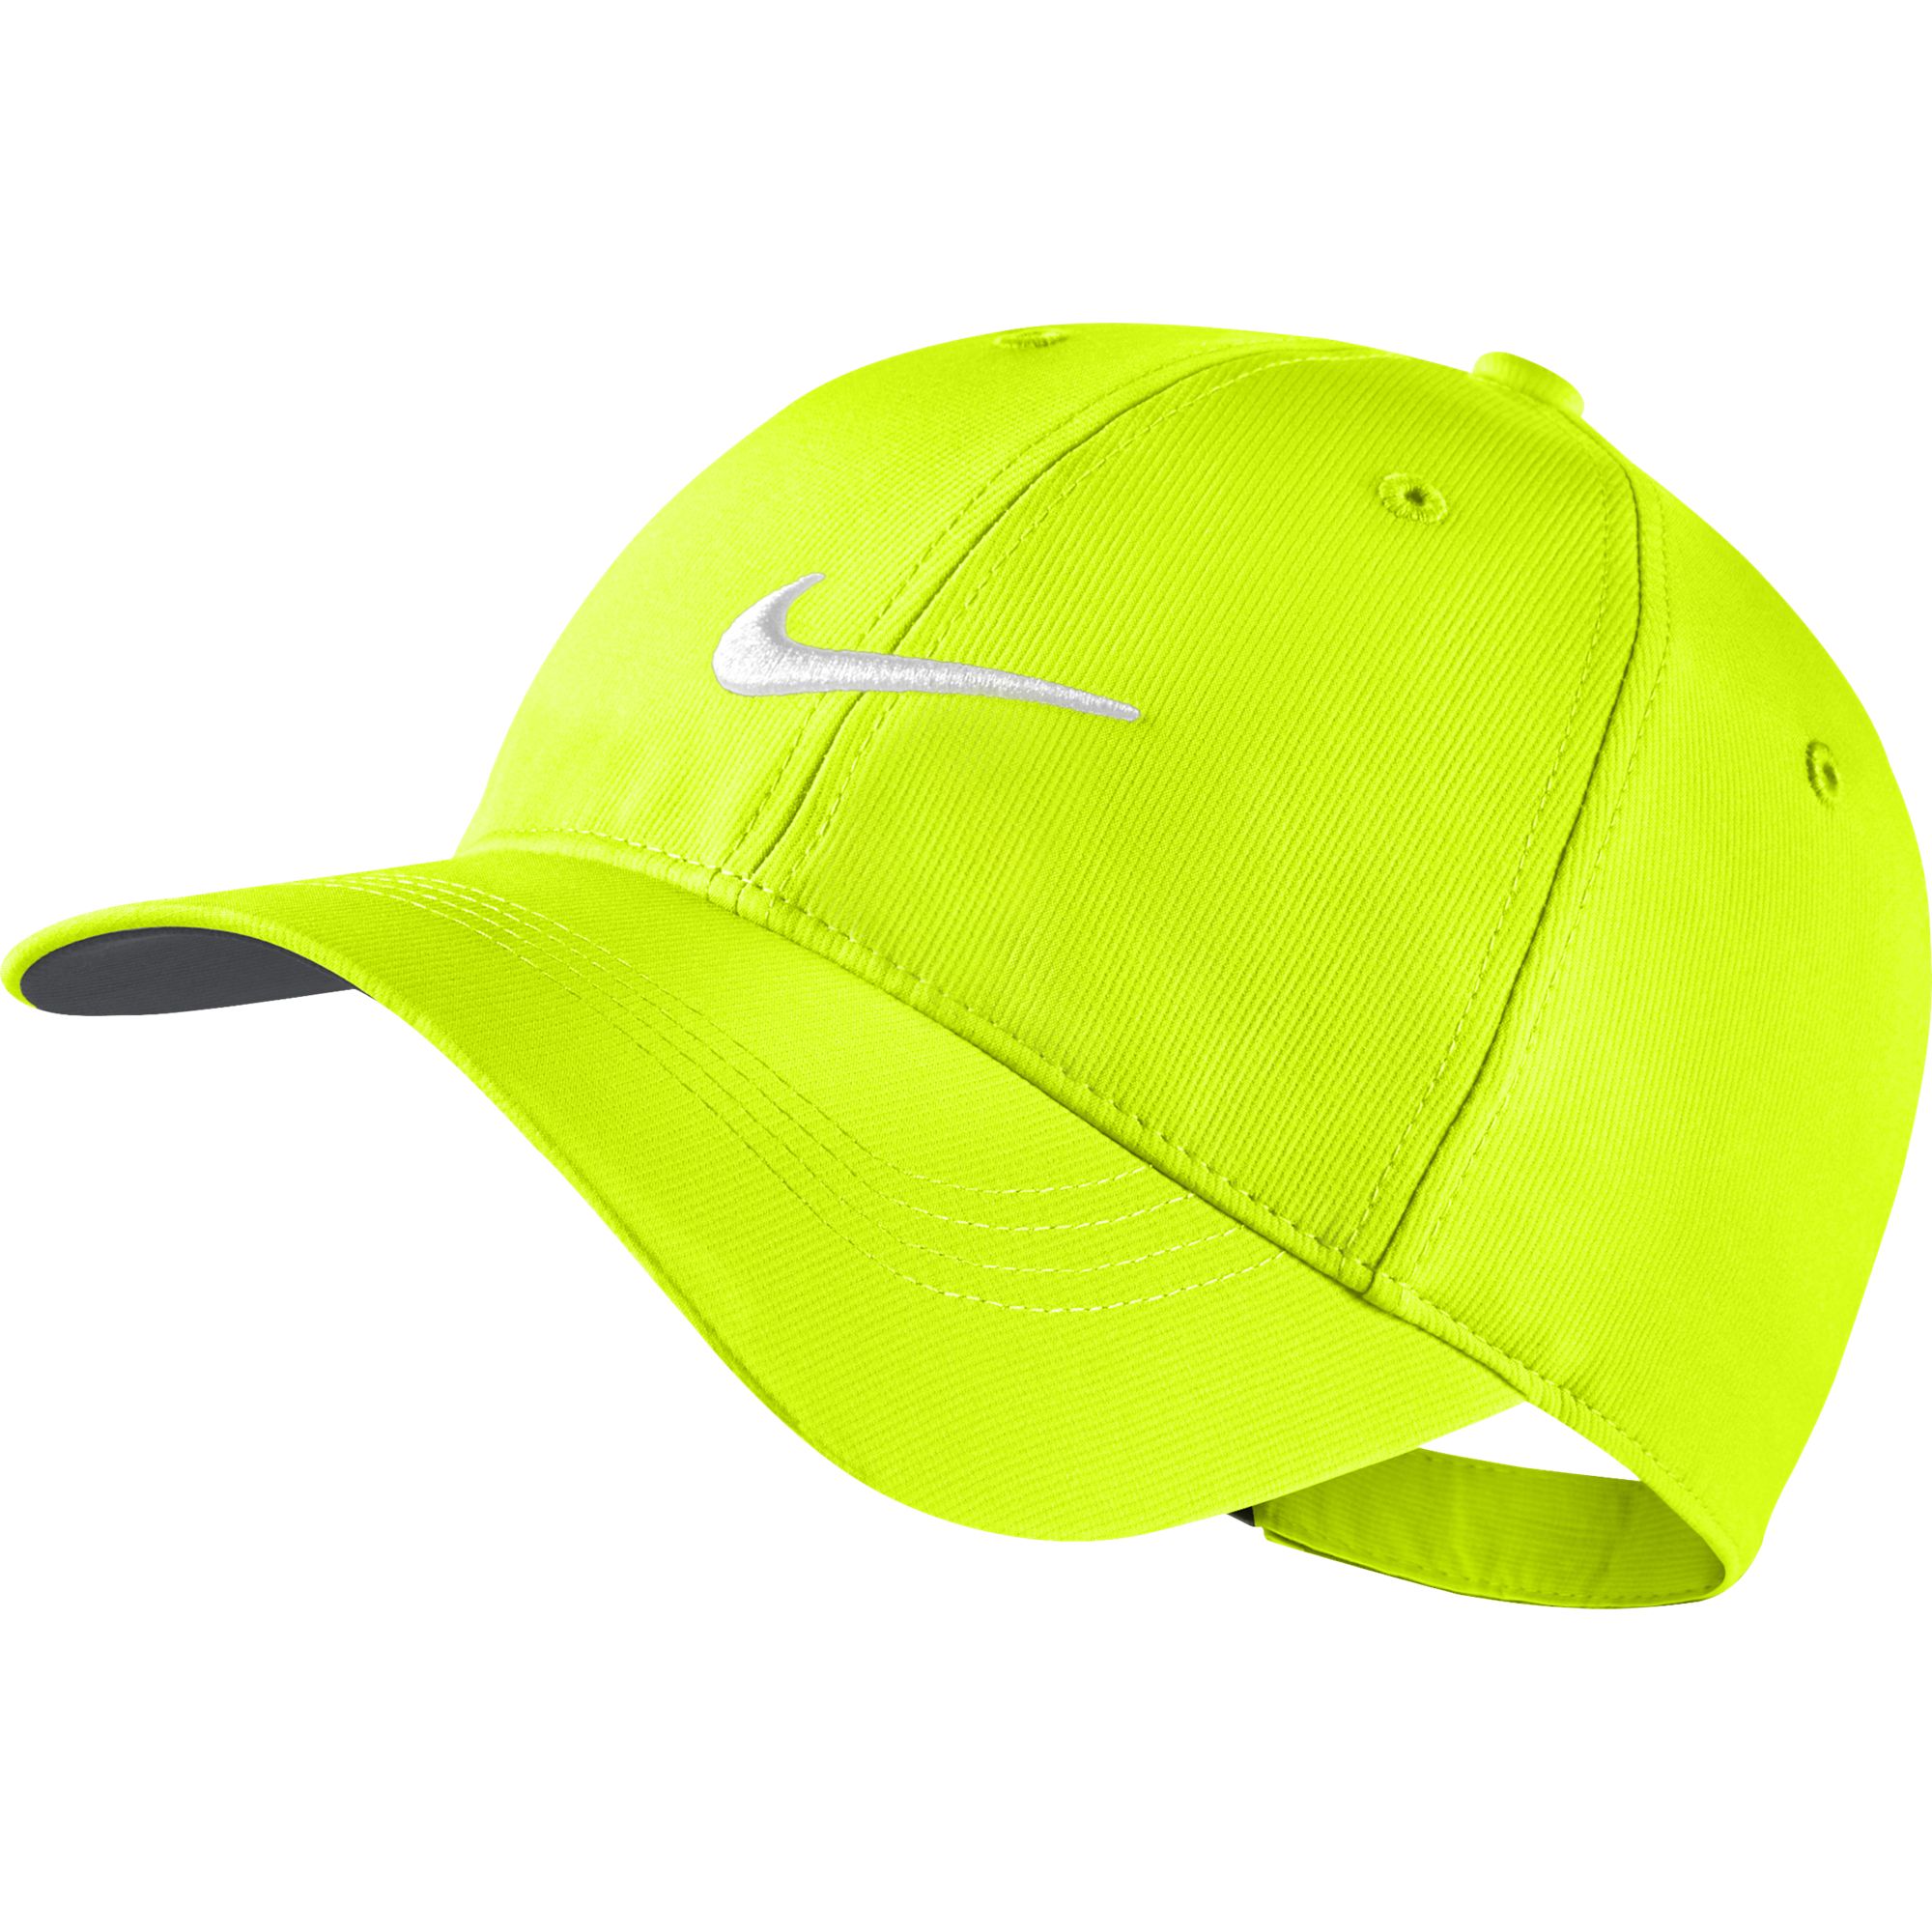 New 2016 Nike Legacy 91 Tech Adjustable Hat/Cap COLOR: Volt | eBay